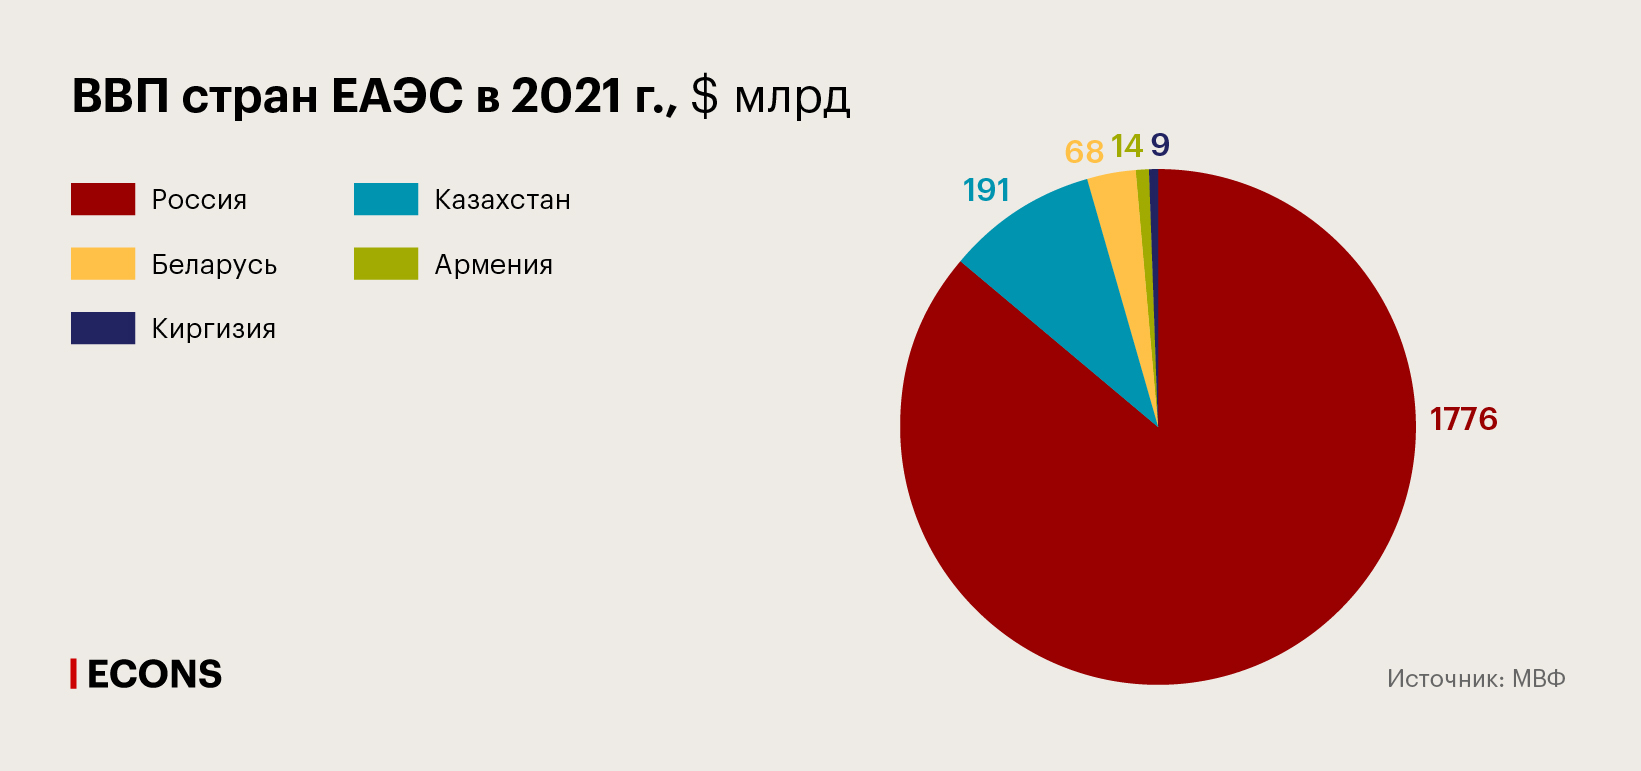 ВВП стран ЕАЭС в 2021 г., $ млрд